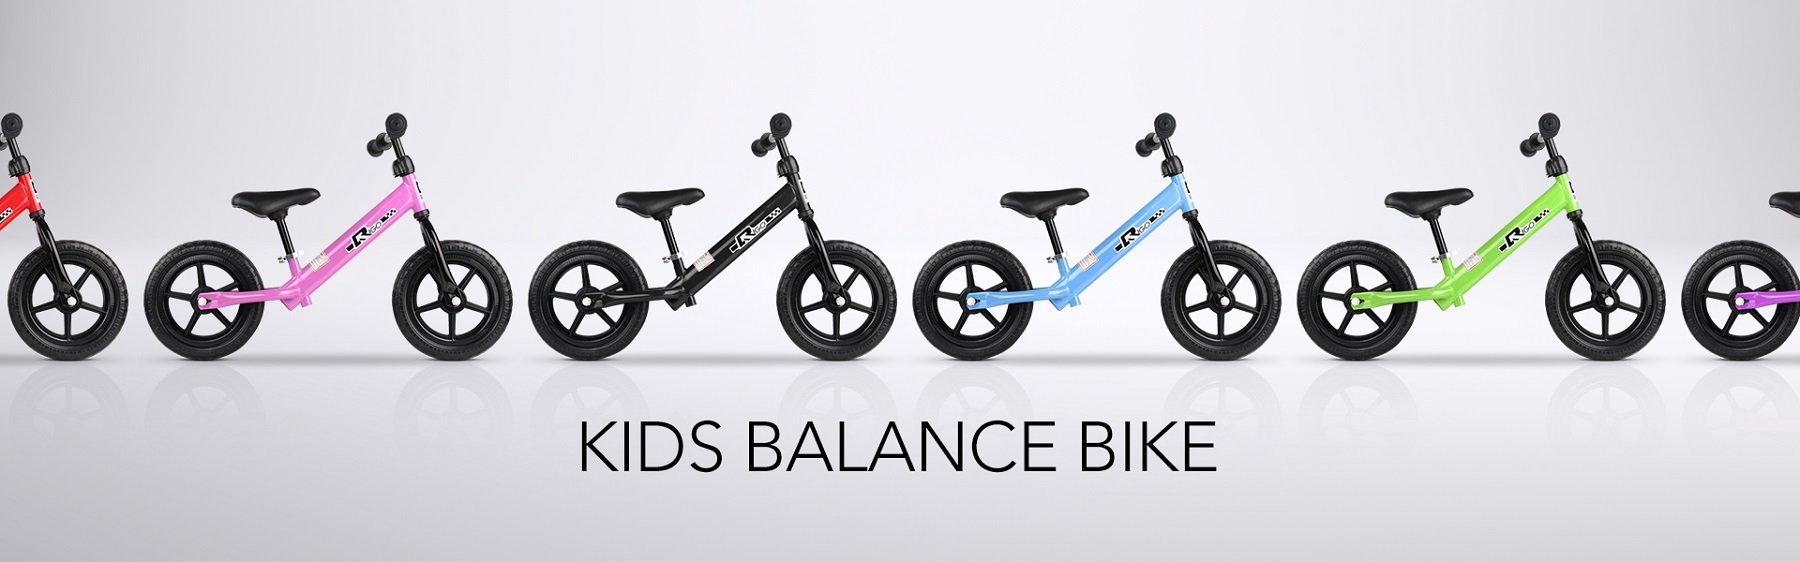 Kids Balance Bikes Toys Australia Delivery - Kids Mega Mart